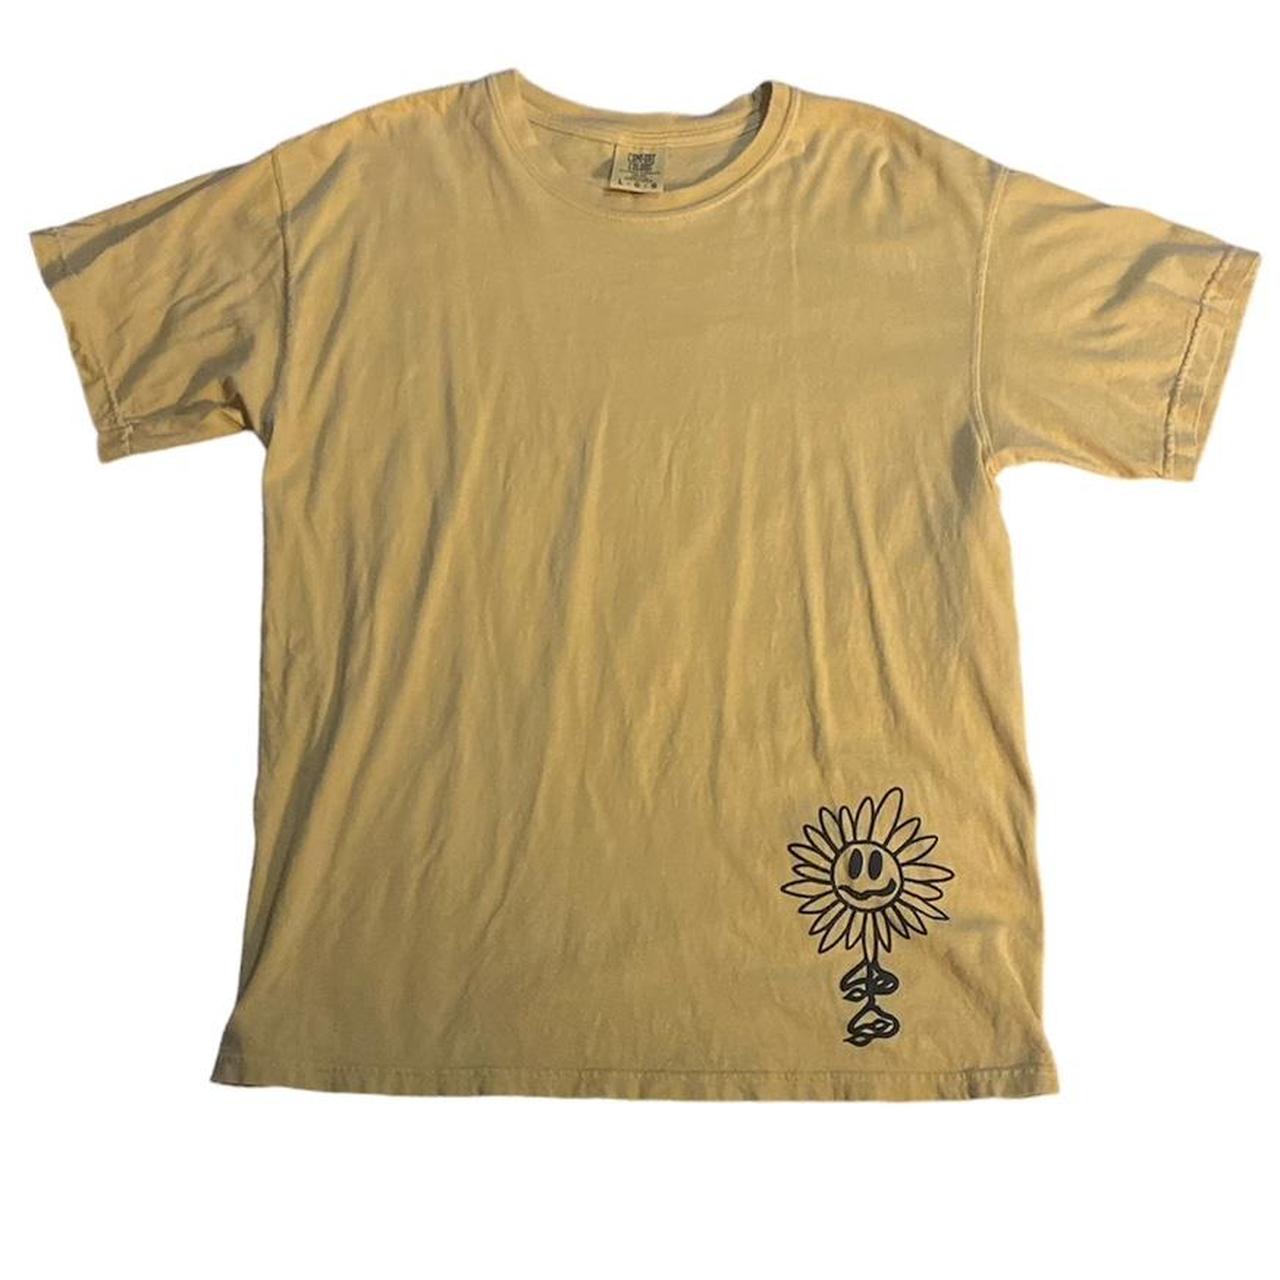 Comfort Colors Yellow Ghetto Kids Size World T Depop - L Shirt